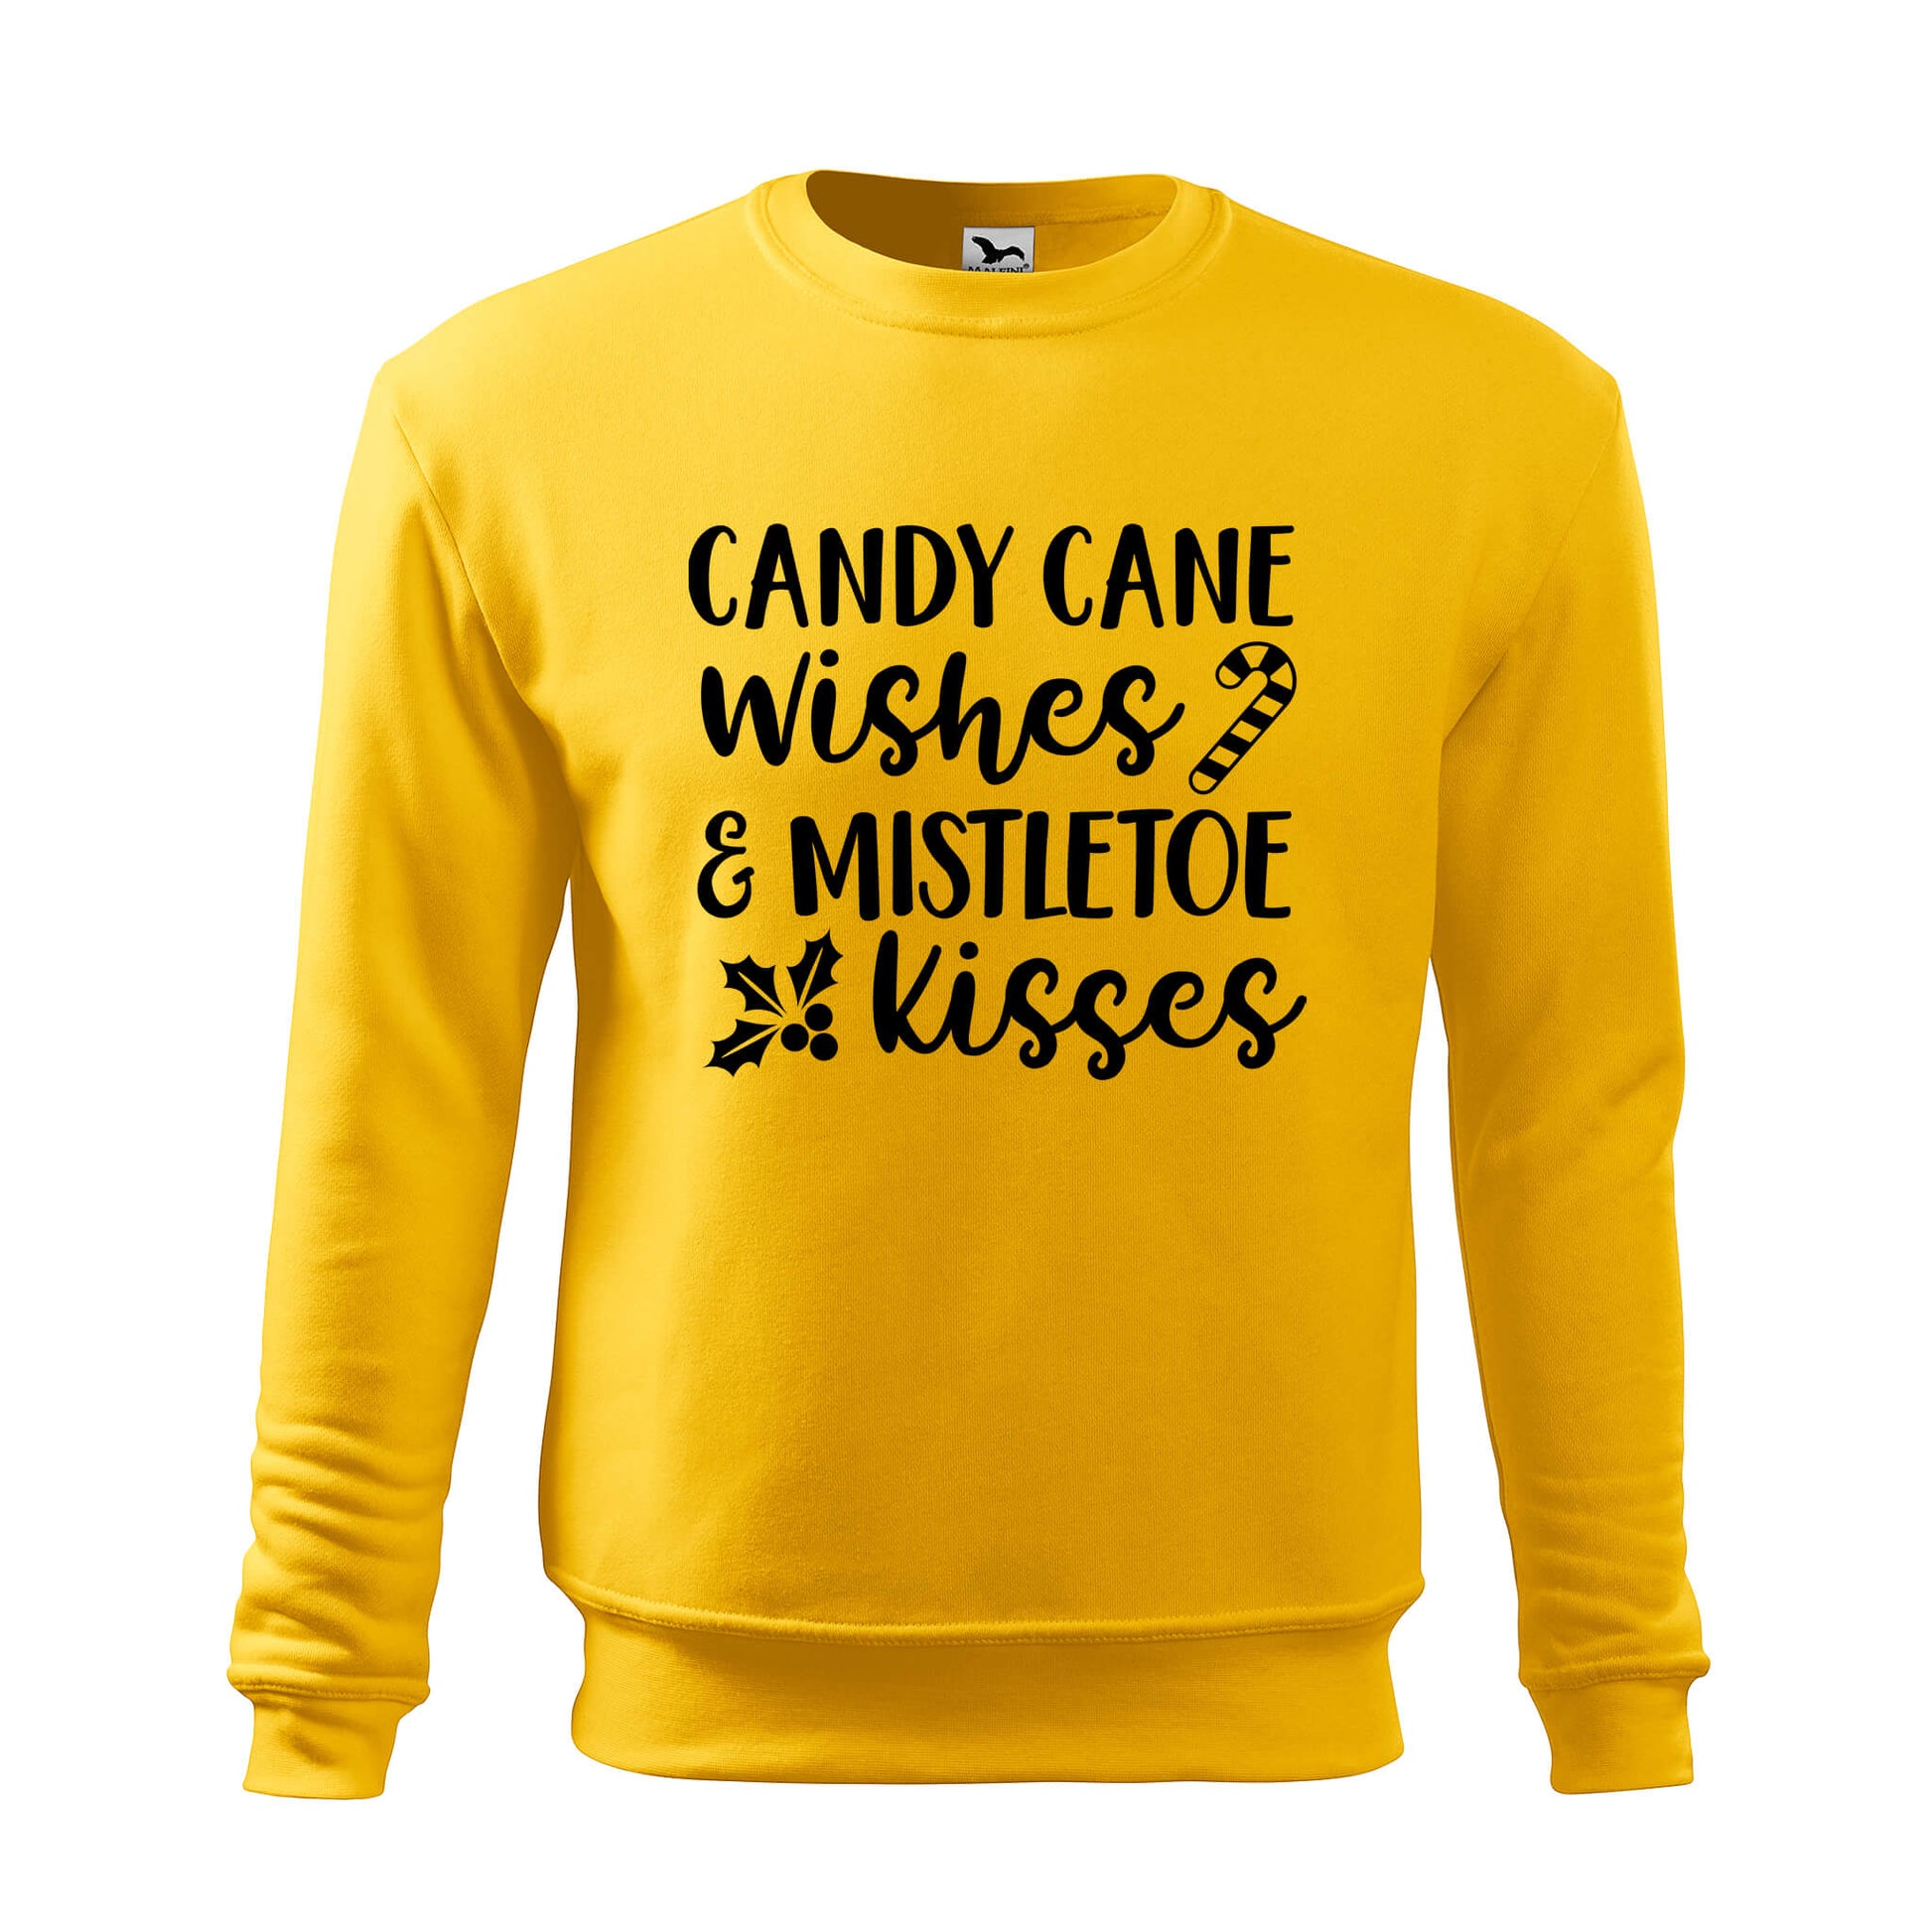 Candy cane wishes mistletoe kisses sweatshirt - rvdesignprint